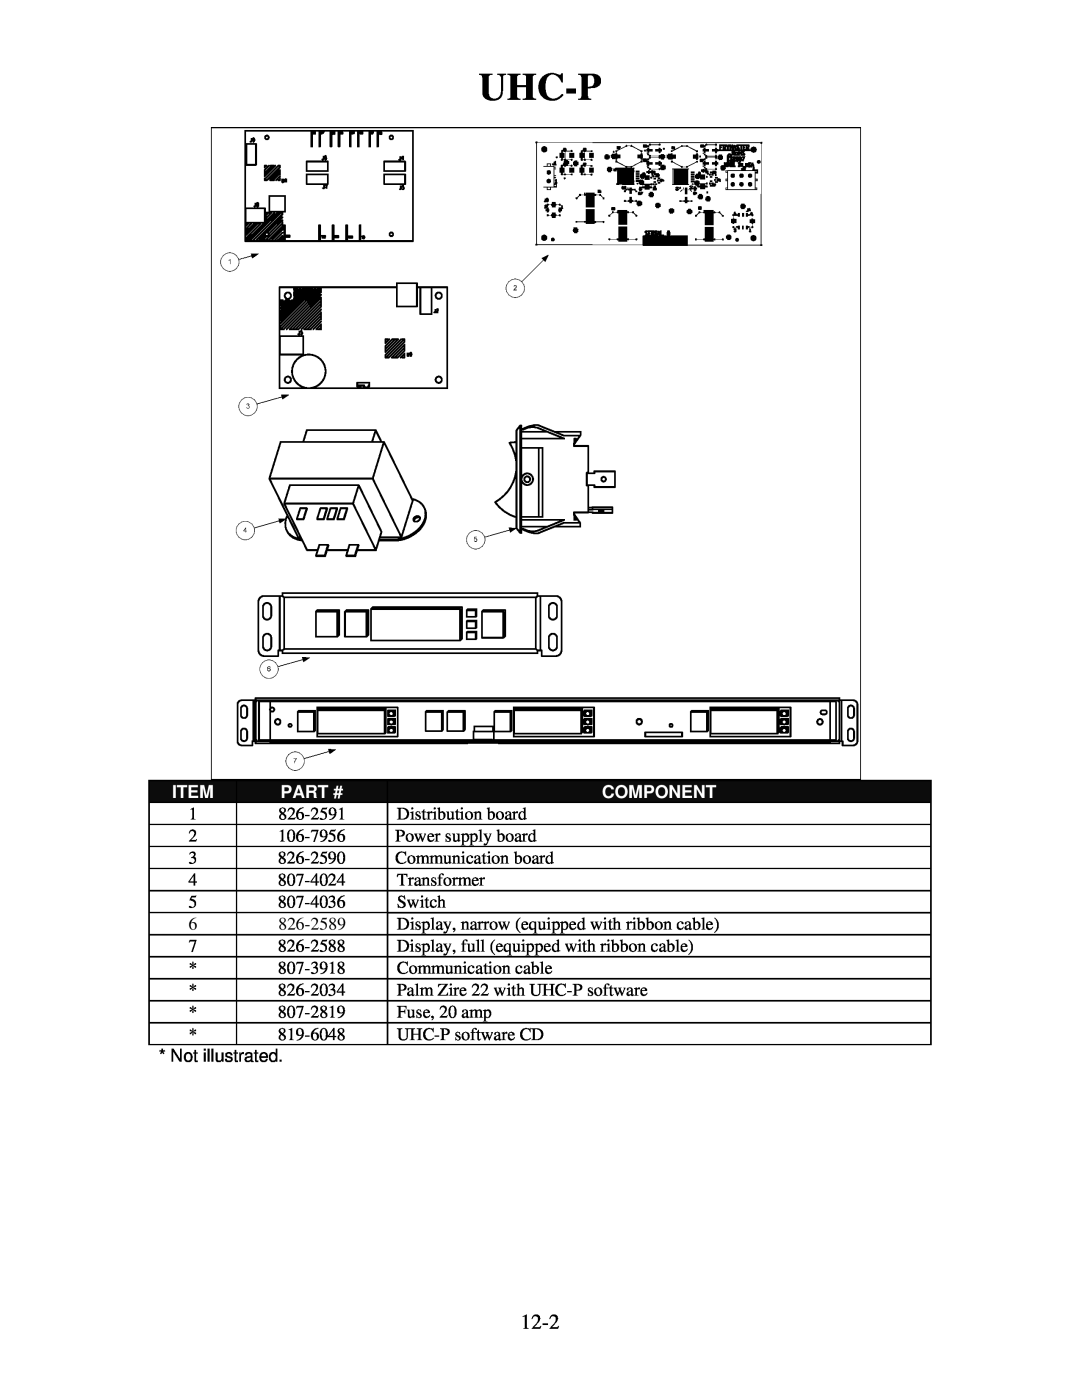 Frymaster 8196321 manual Uhc-P, Part #, Component, 826-2591 